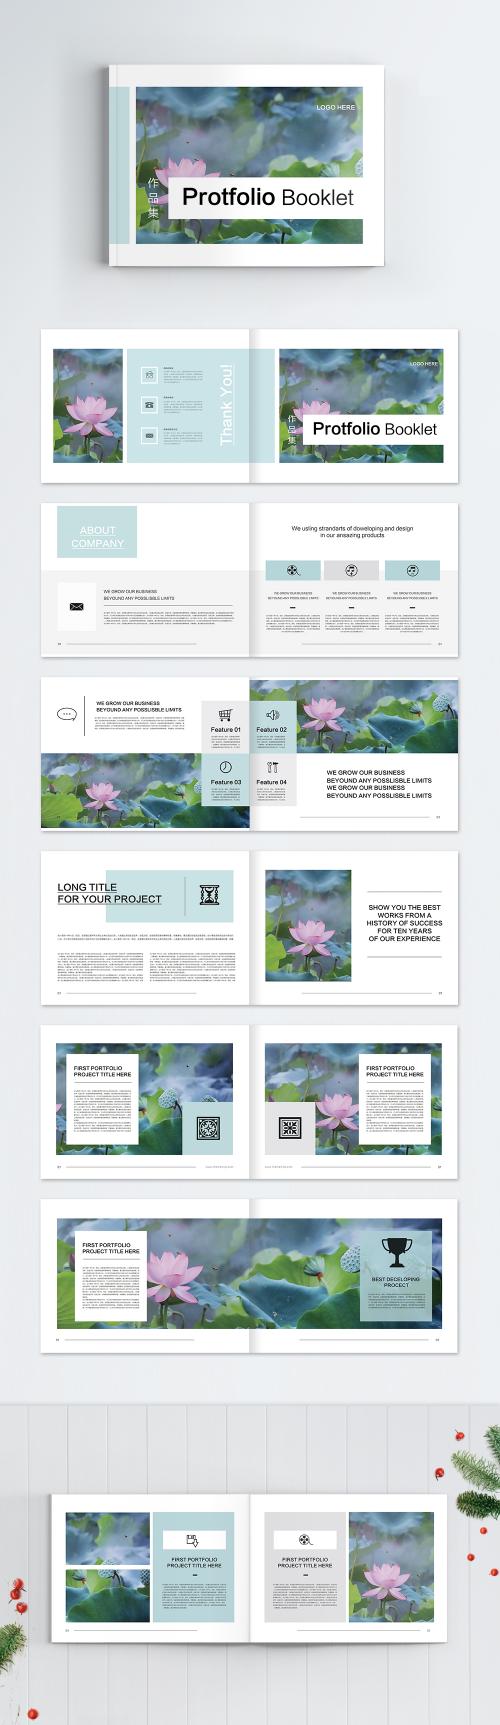 LovePik - lotus fresh series complete brochure corporate design template - 400160993